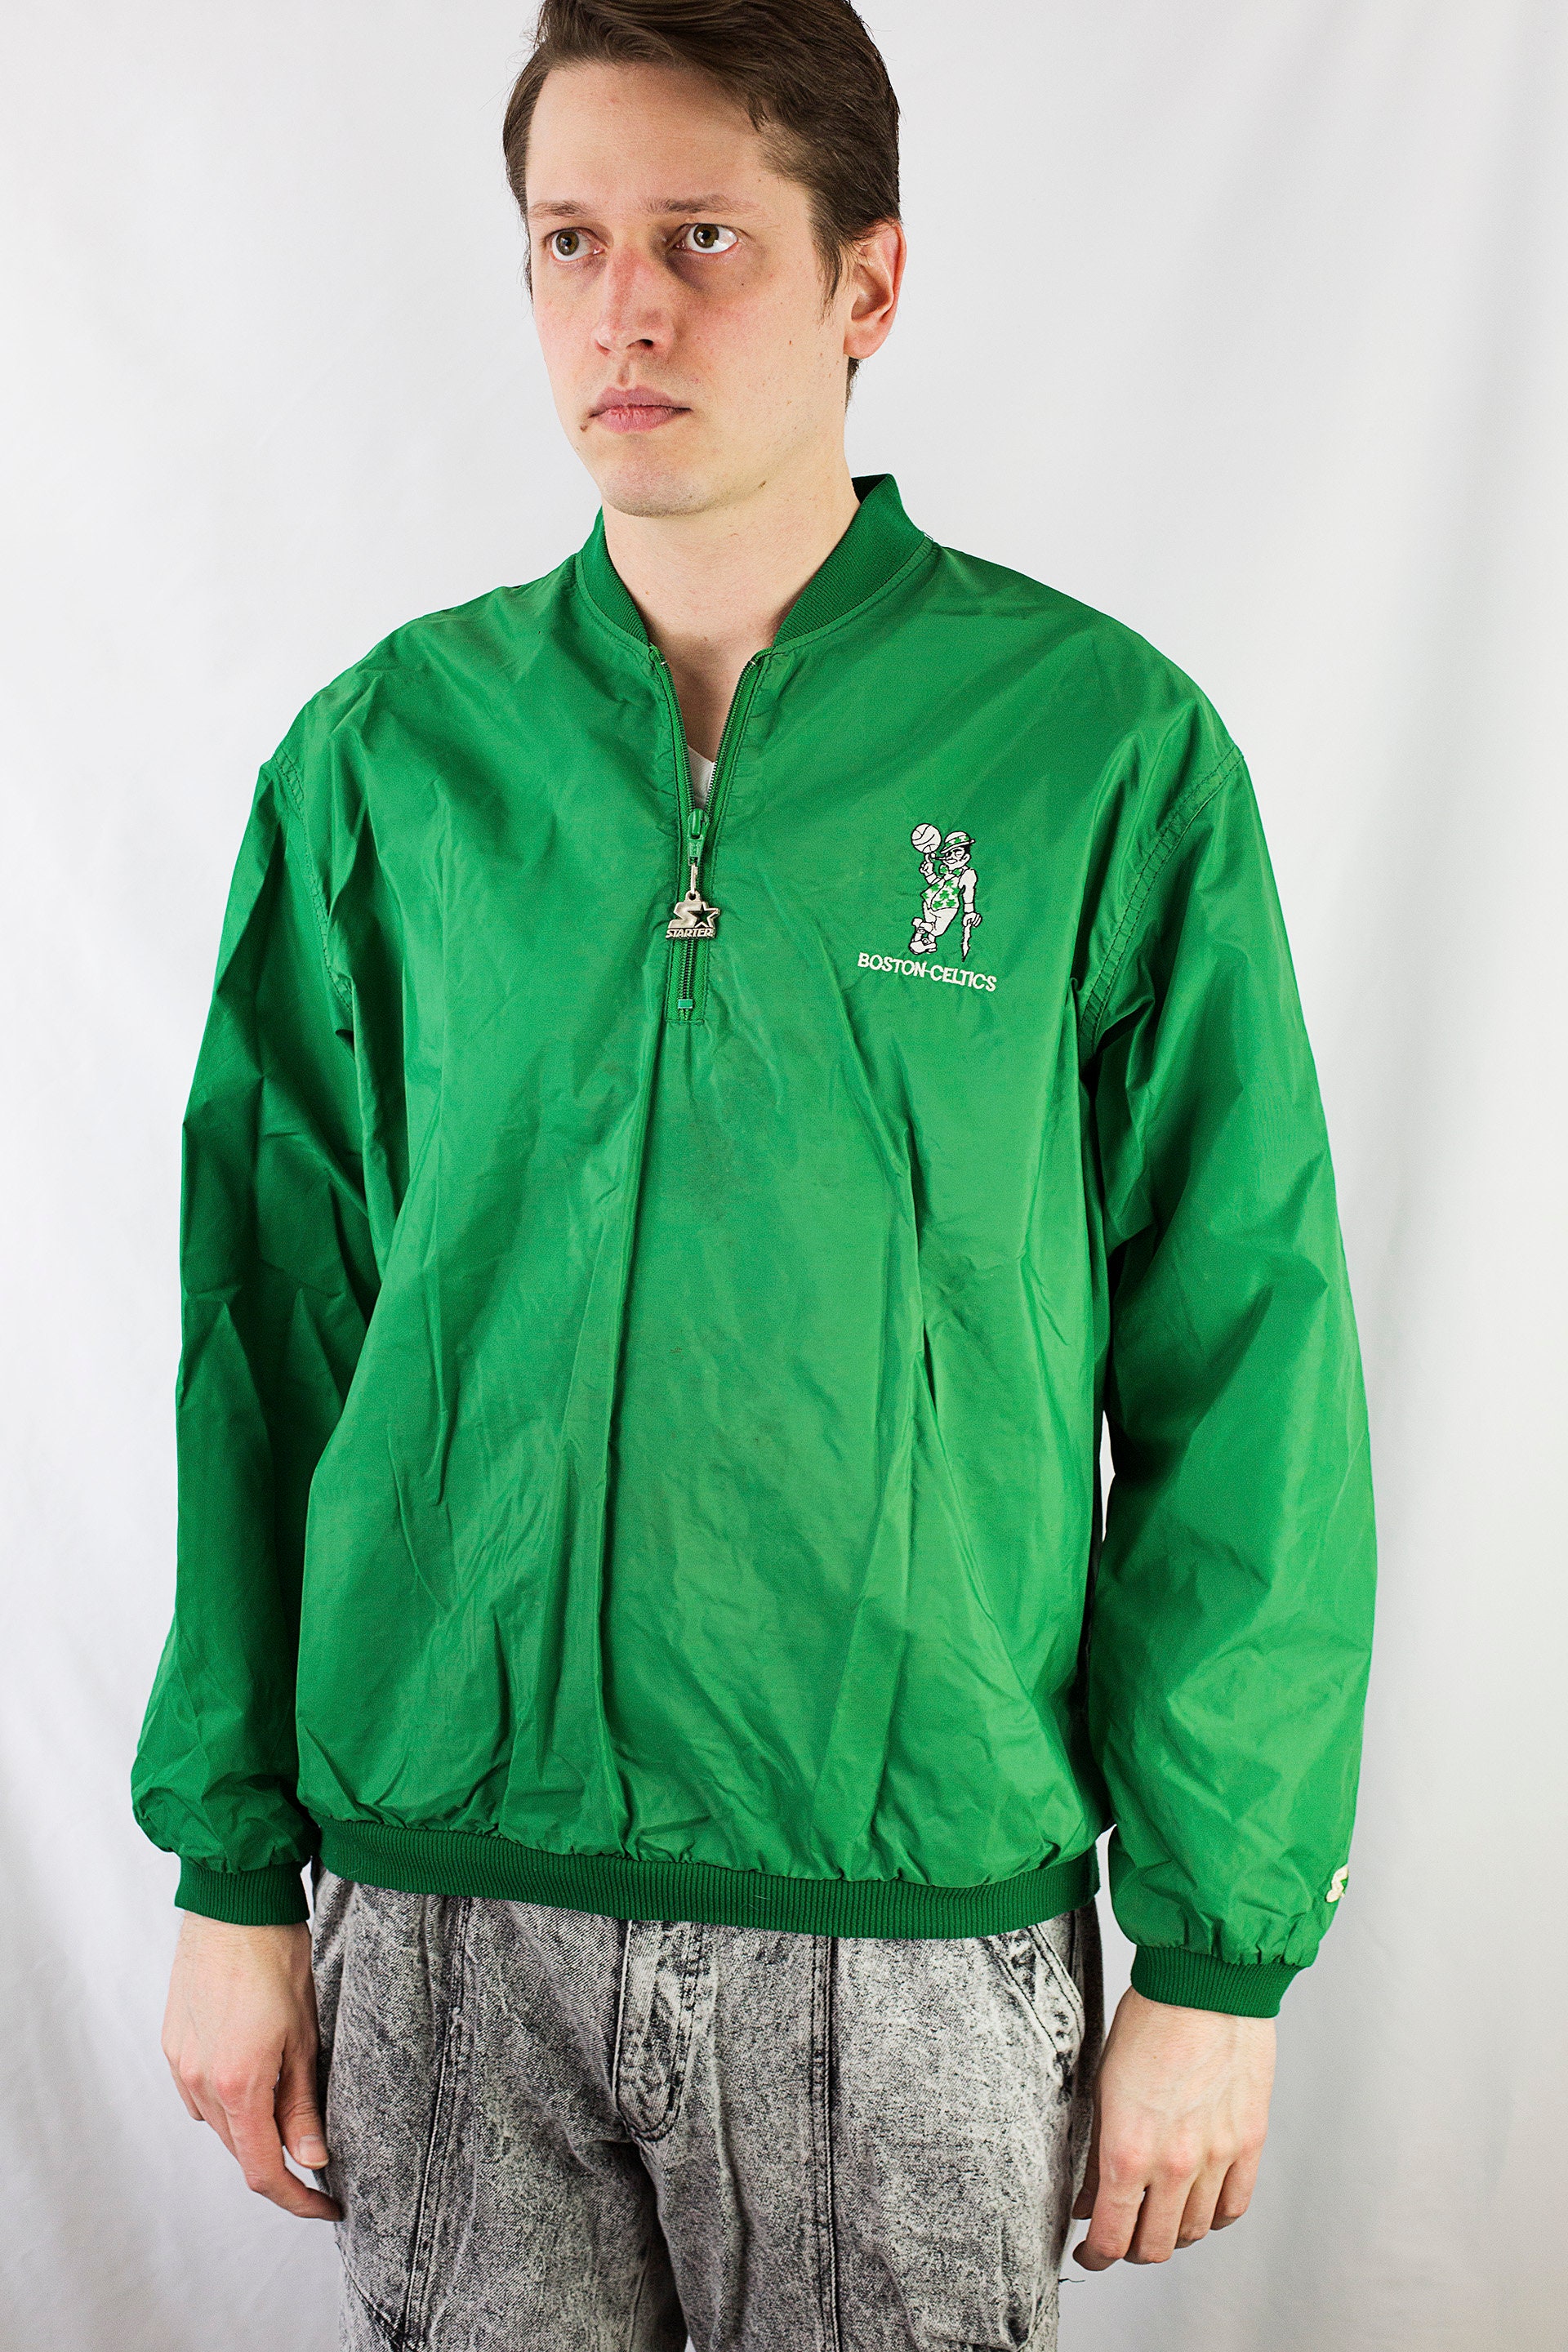 Champion Celtics Embroidered Track Jacket Zip up Hoodie 